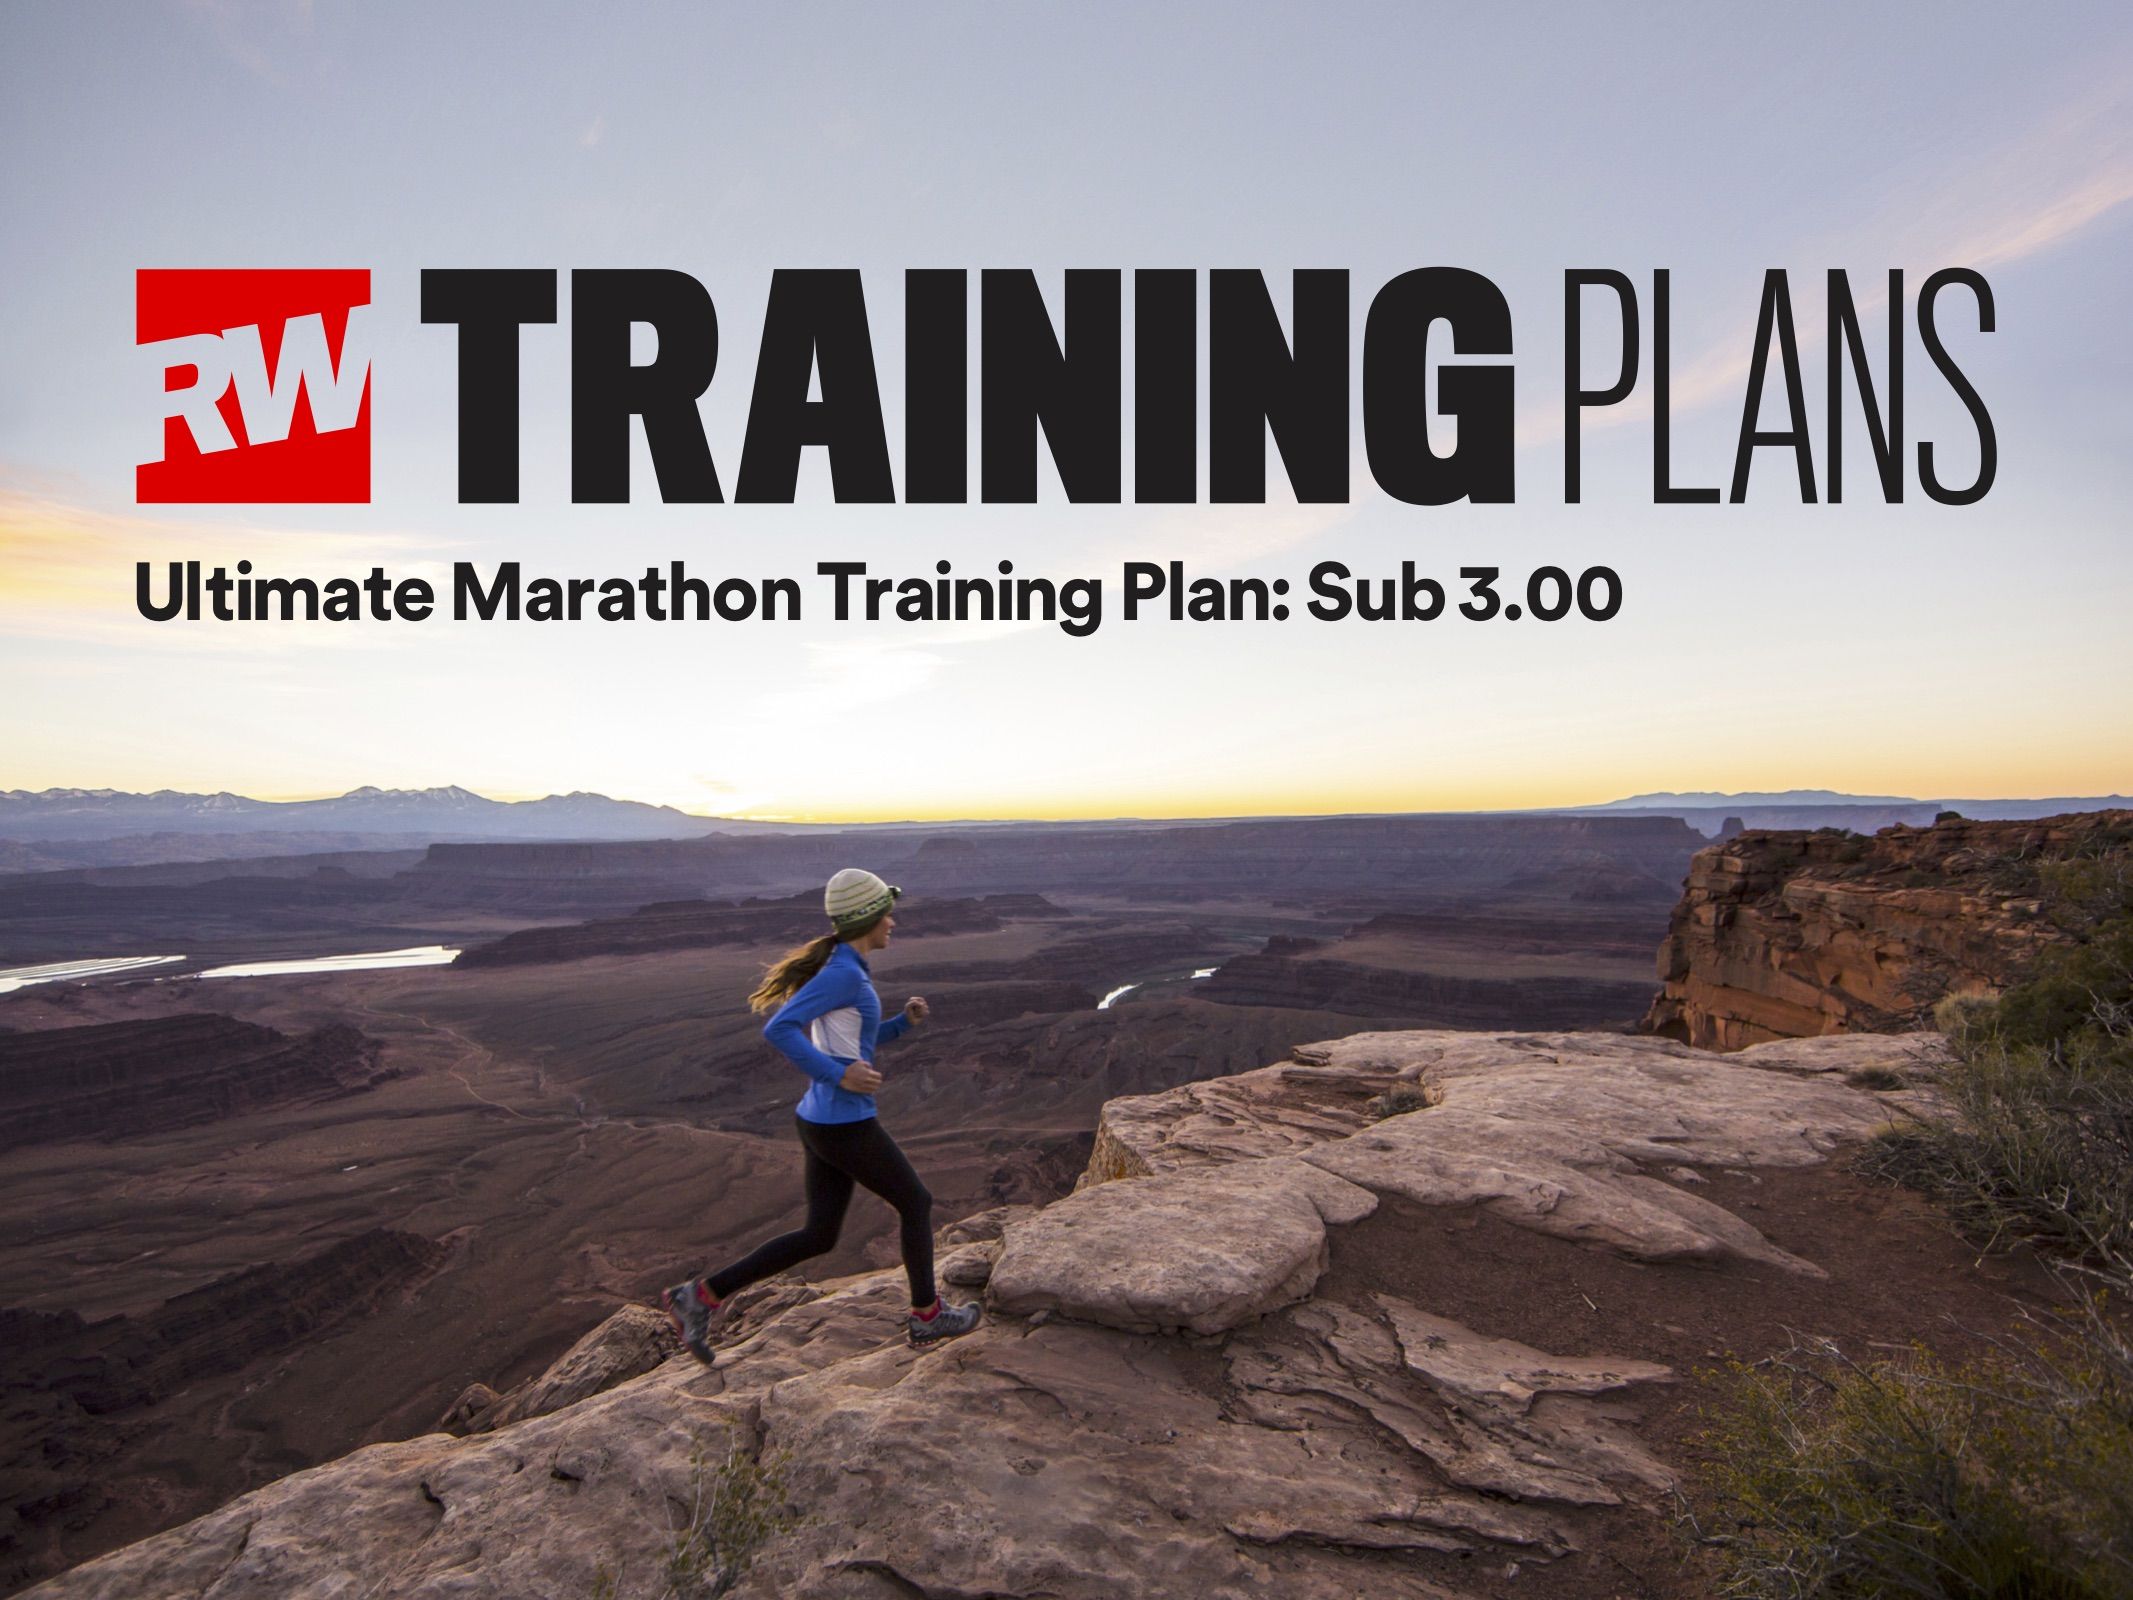 Rw S Ultimate 16 Week Marathon Training Plan For Runners Looking To Run Sub 3 00